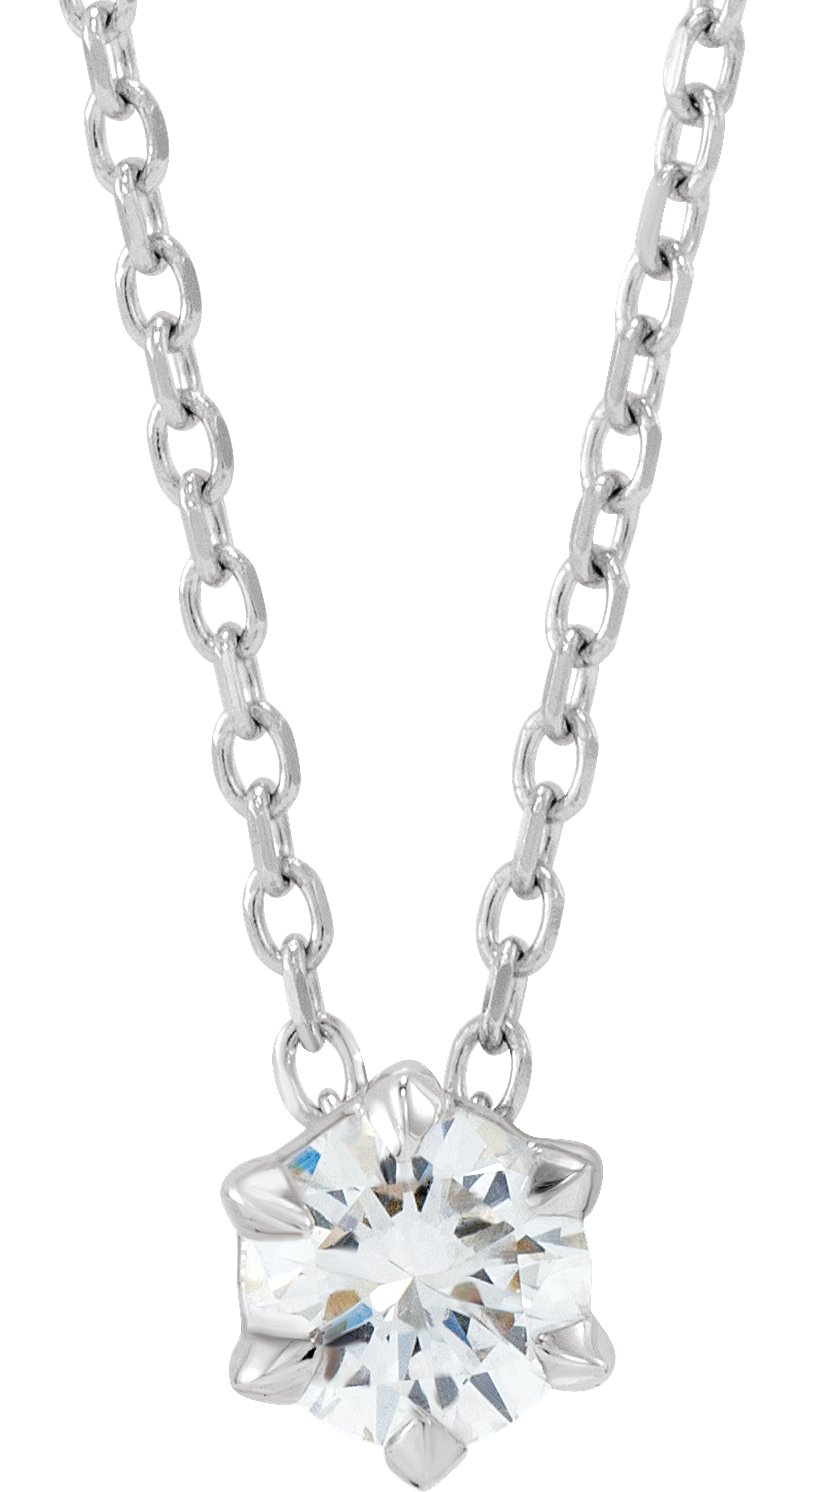 Diamond Solitaire 4 mm Necklace